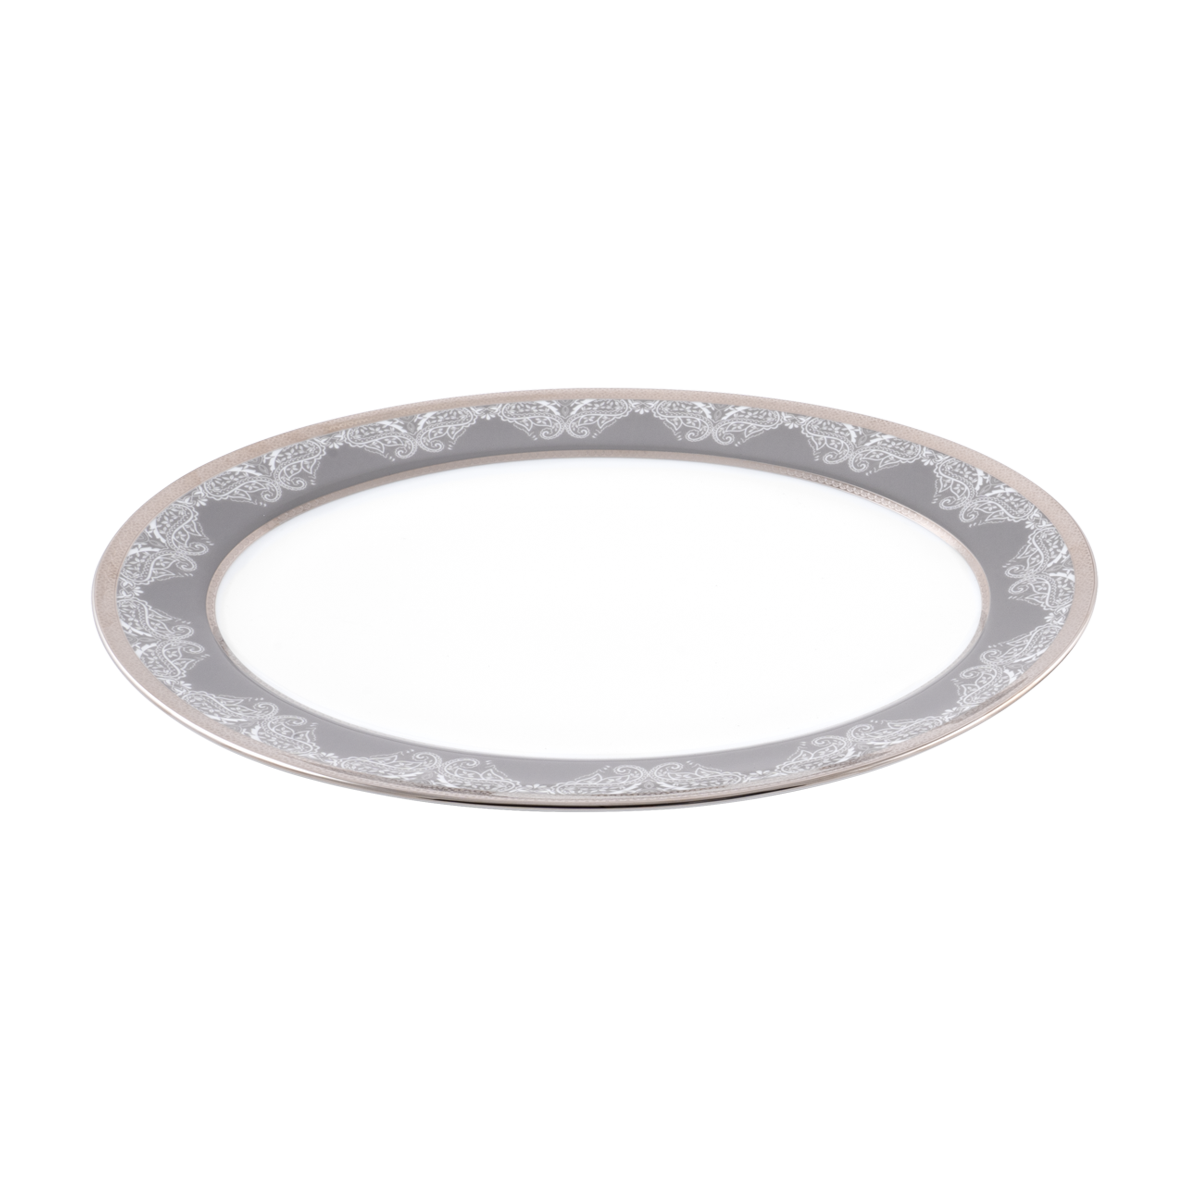 Oval Dish - Romane Grey